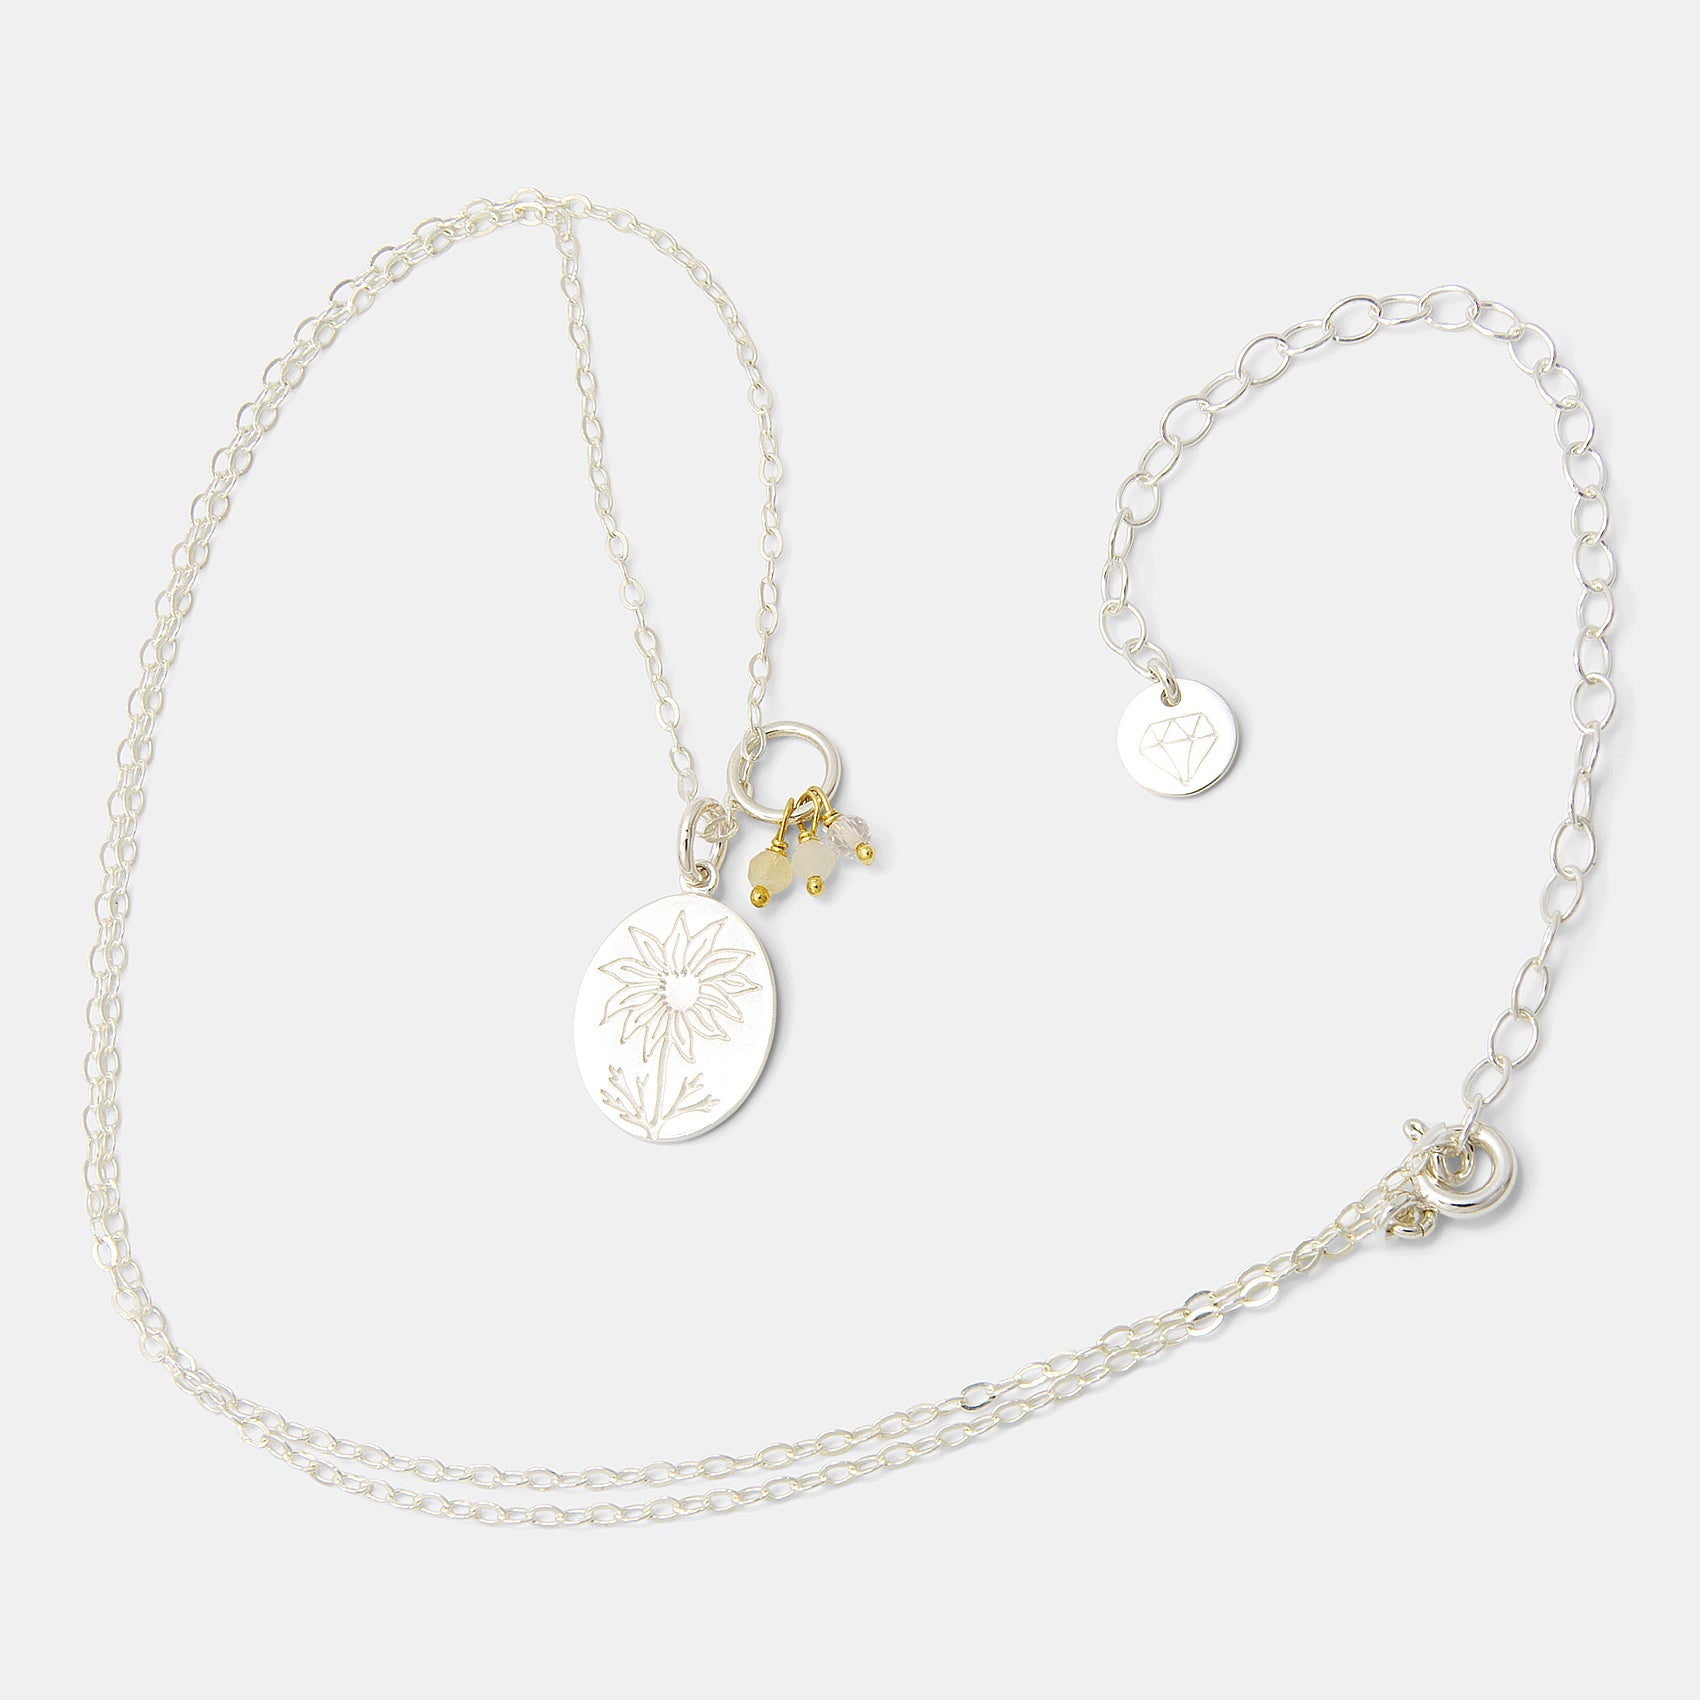 Flannel Flower Oval & White Opals Necklace - Simone Walsh Jewellery Australia